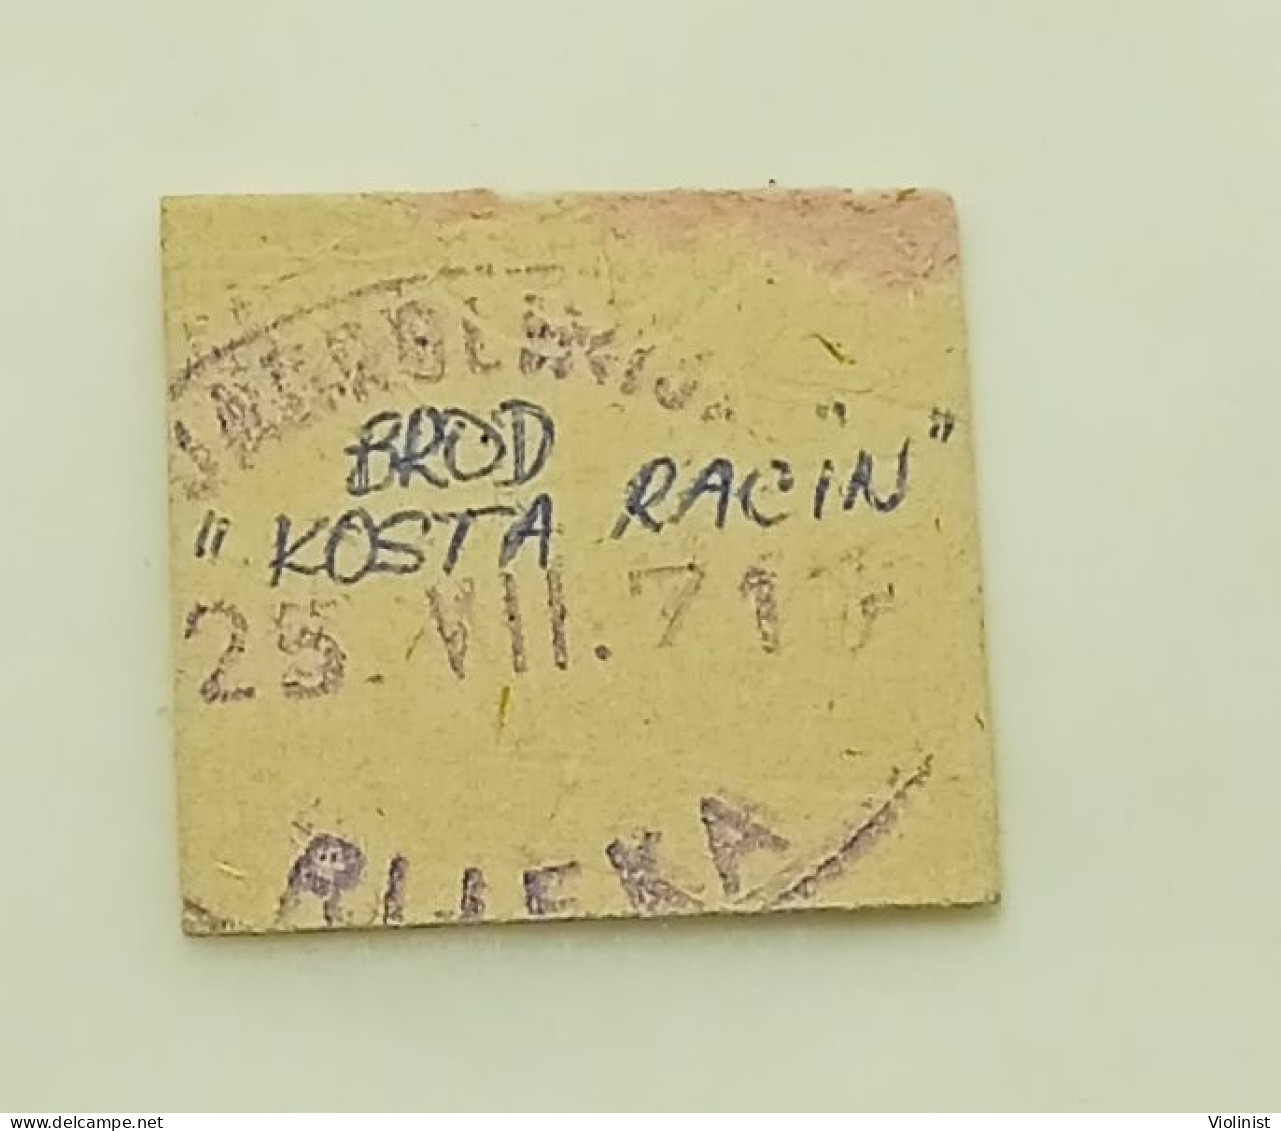 Yugoslavia (Croatia) - Half Ticket For A Trip On The Ship "Kosta Racin" From Rijeka To Cres In 1971. - Europe